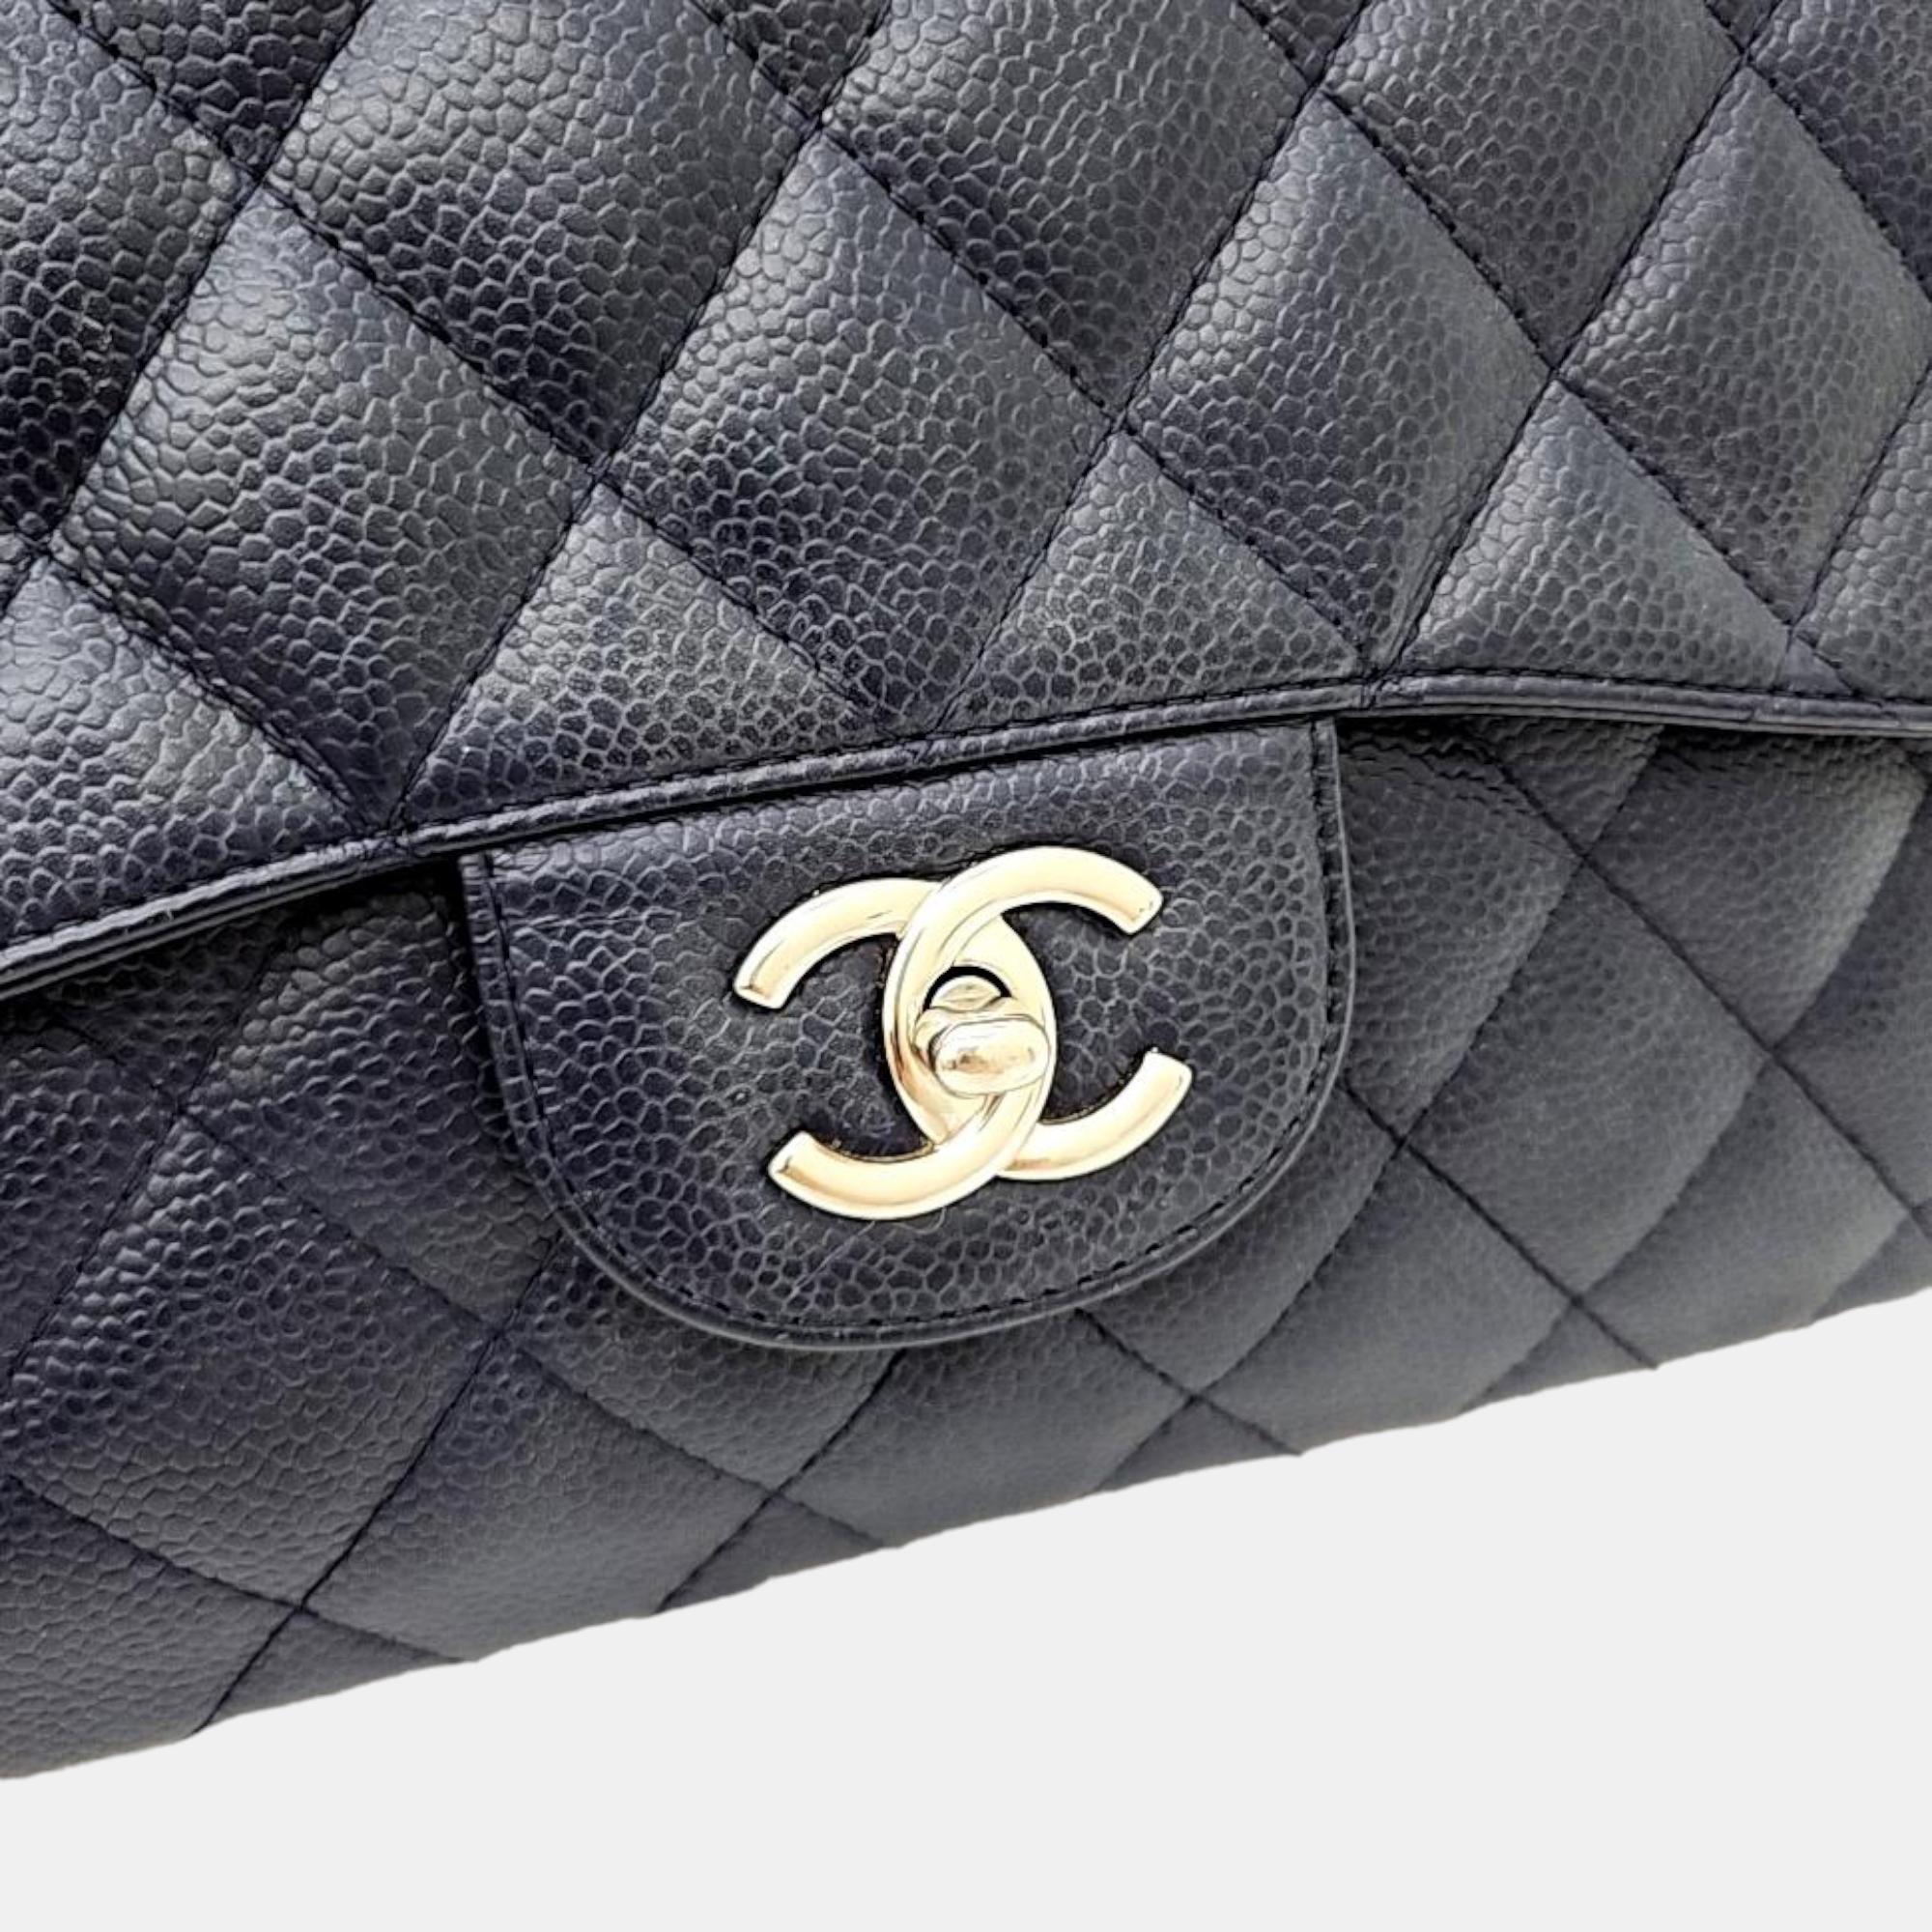 Chanel Black Caviar Leather Classic Double Flap Jumbo Bag